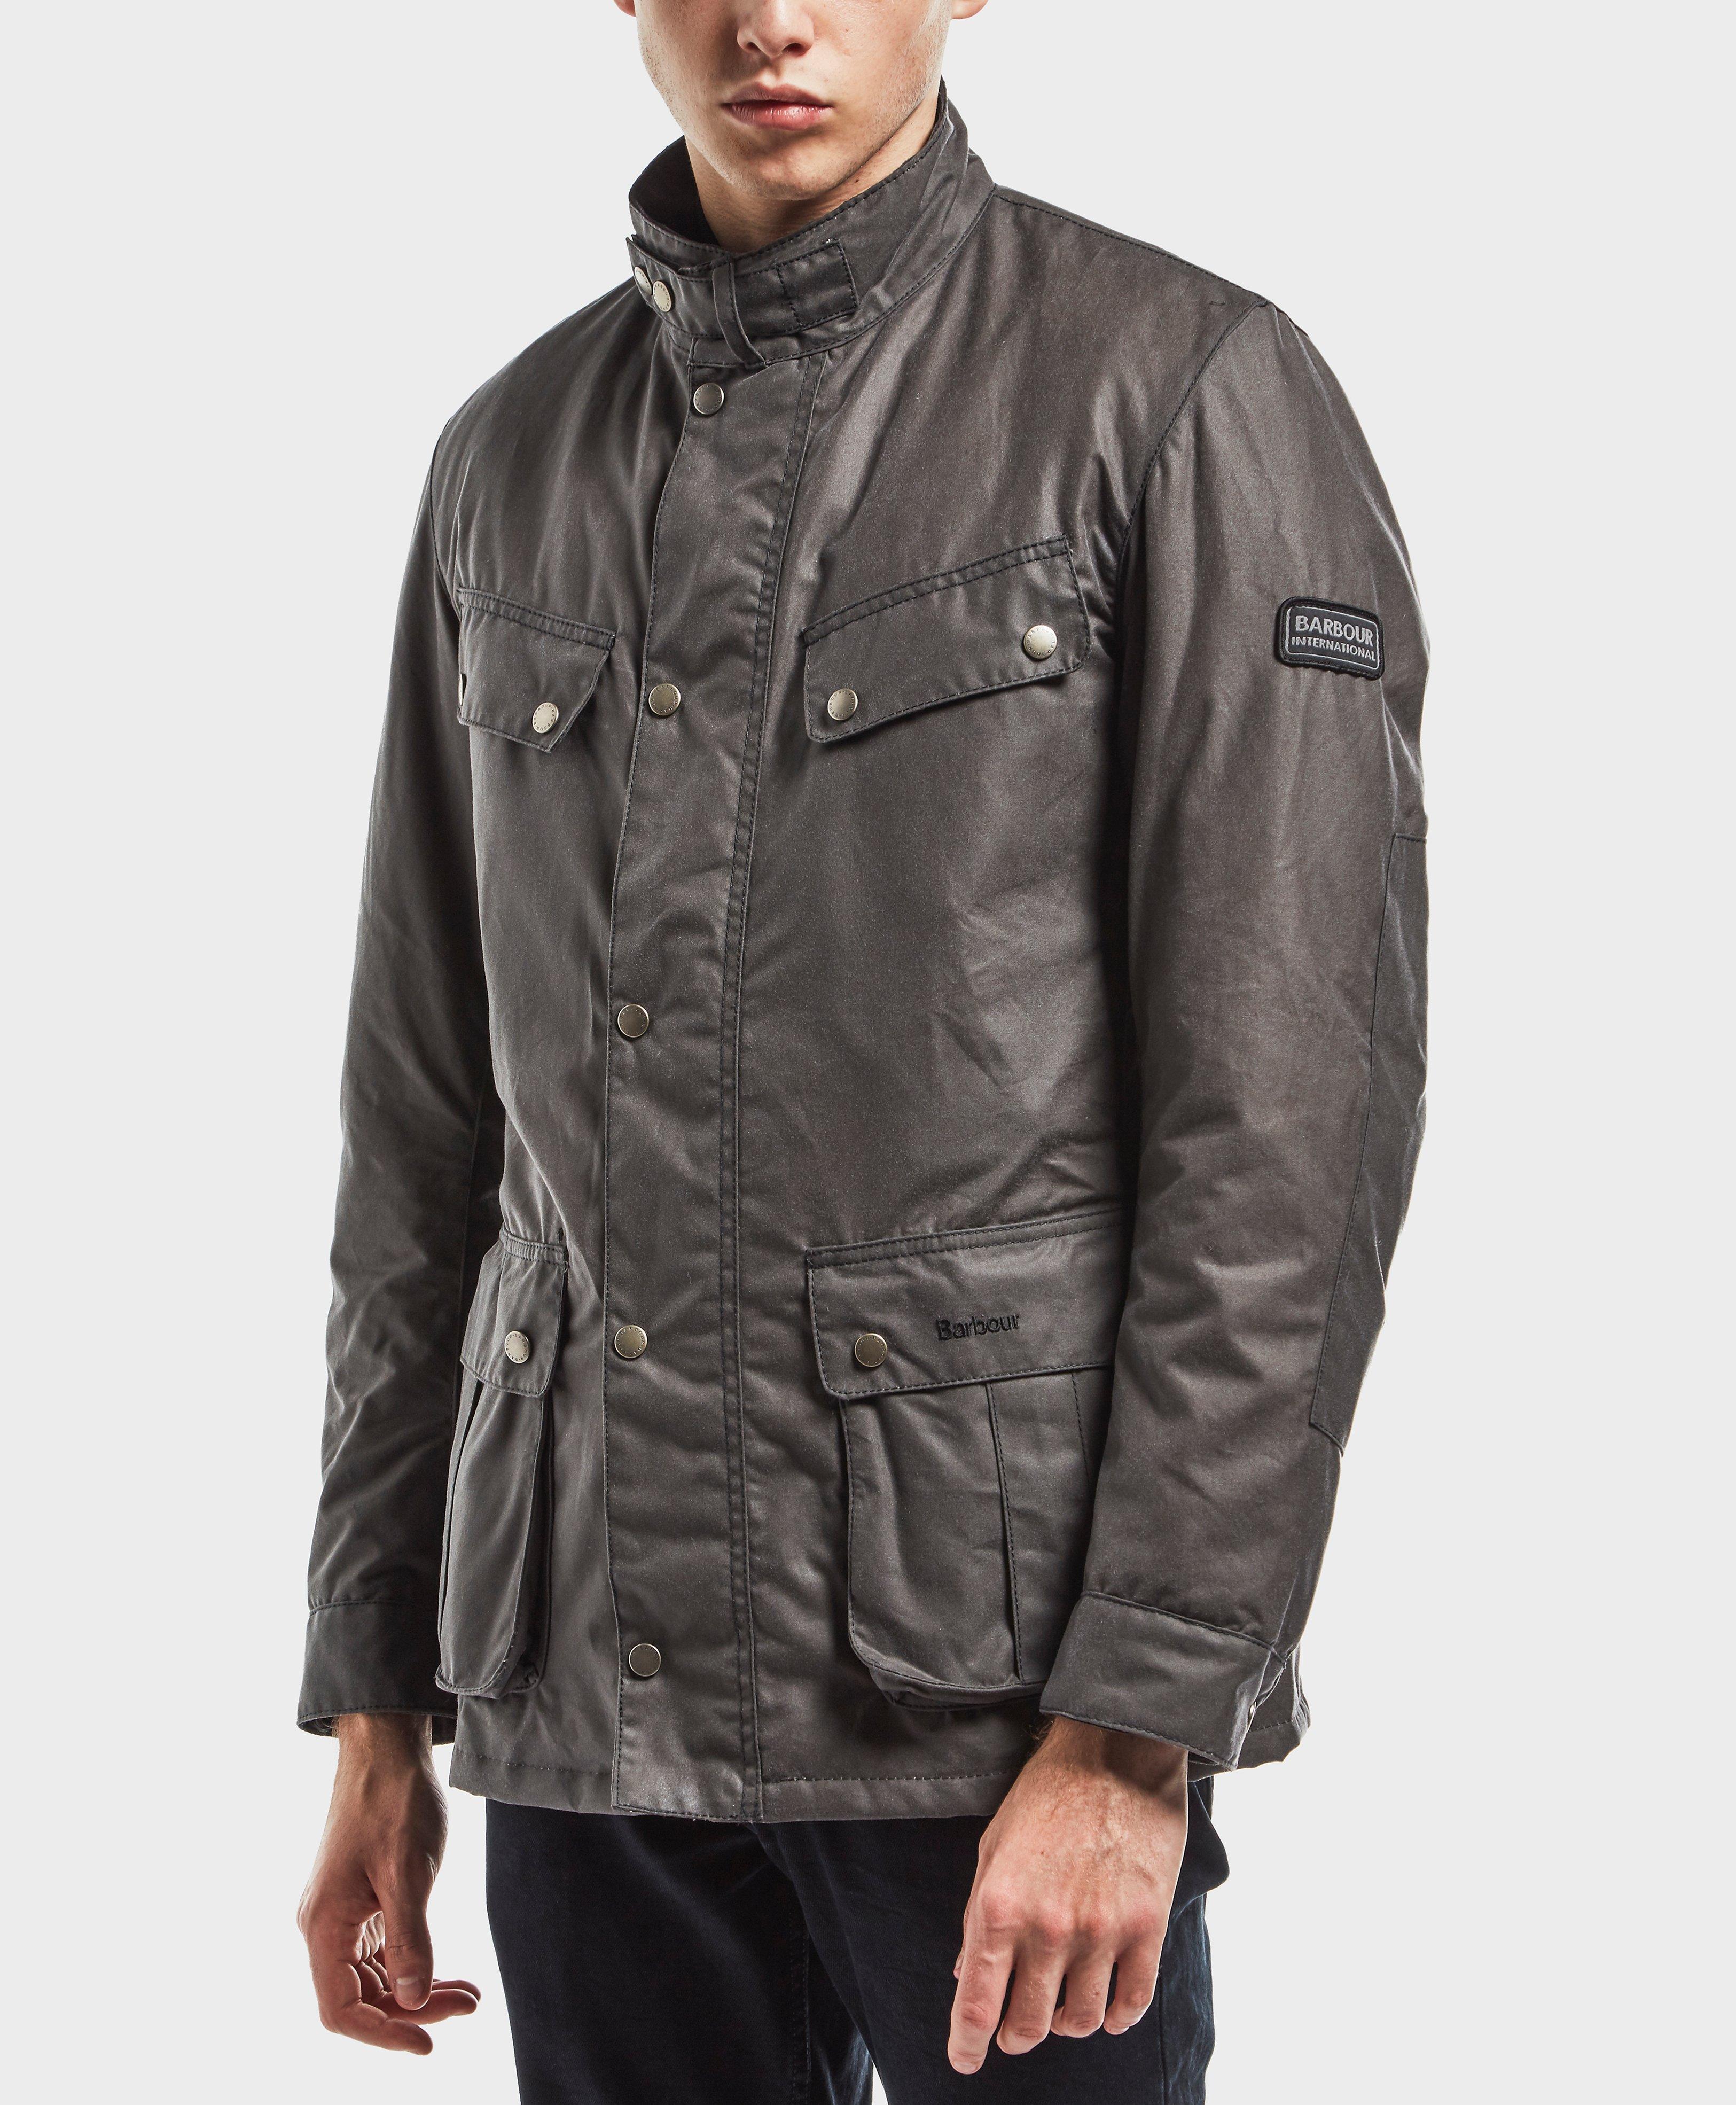 Lyst - Barbour International Duke Jacket - Exclusive for Men